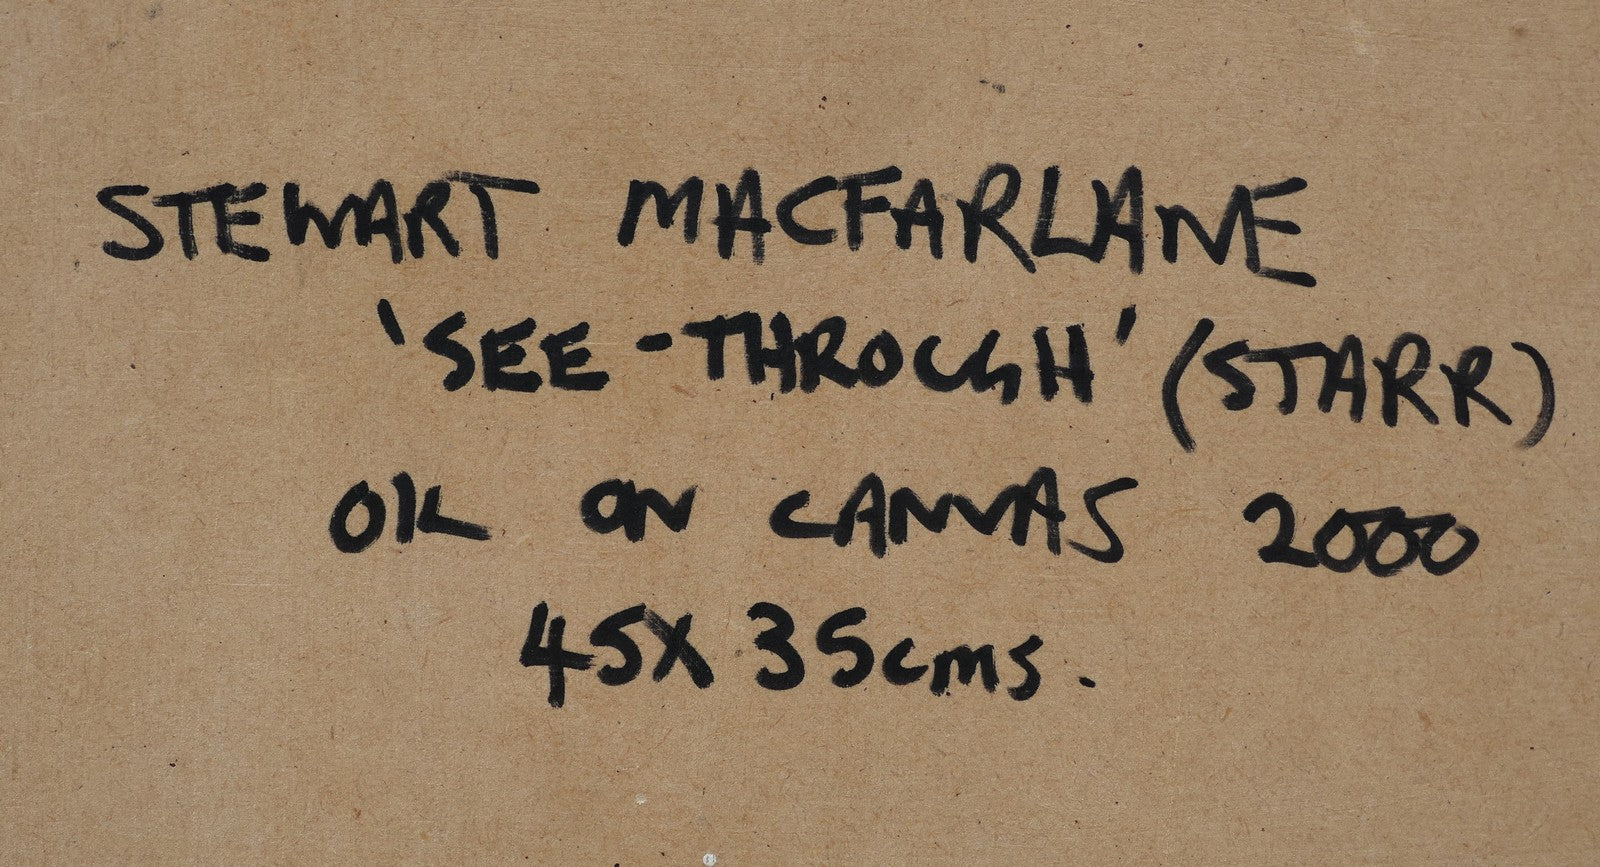 Stewart MacFarlane 'See-Through (Starr)'